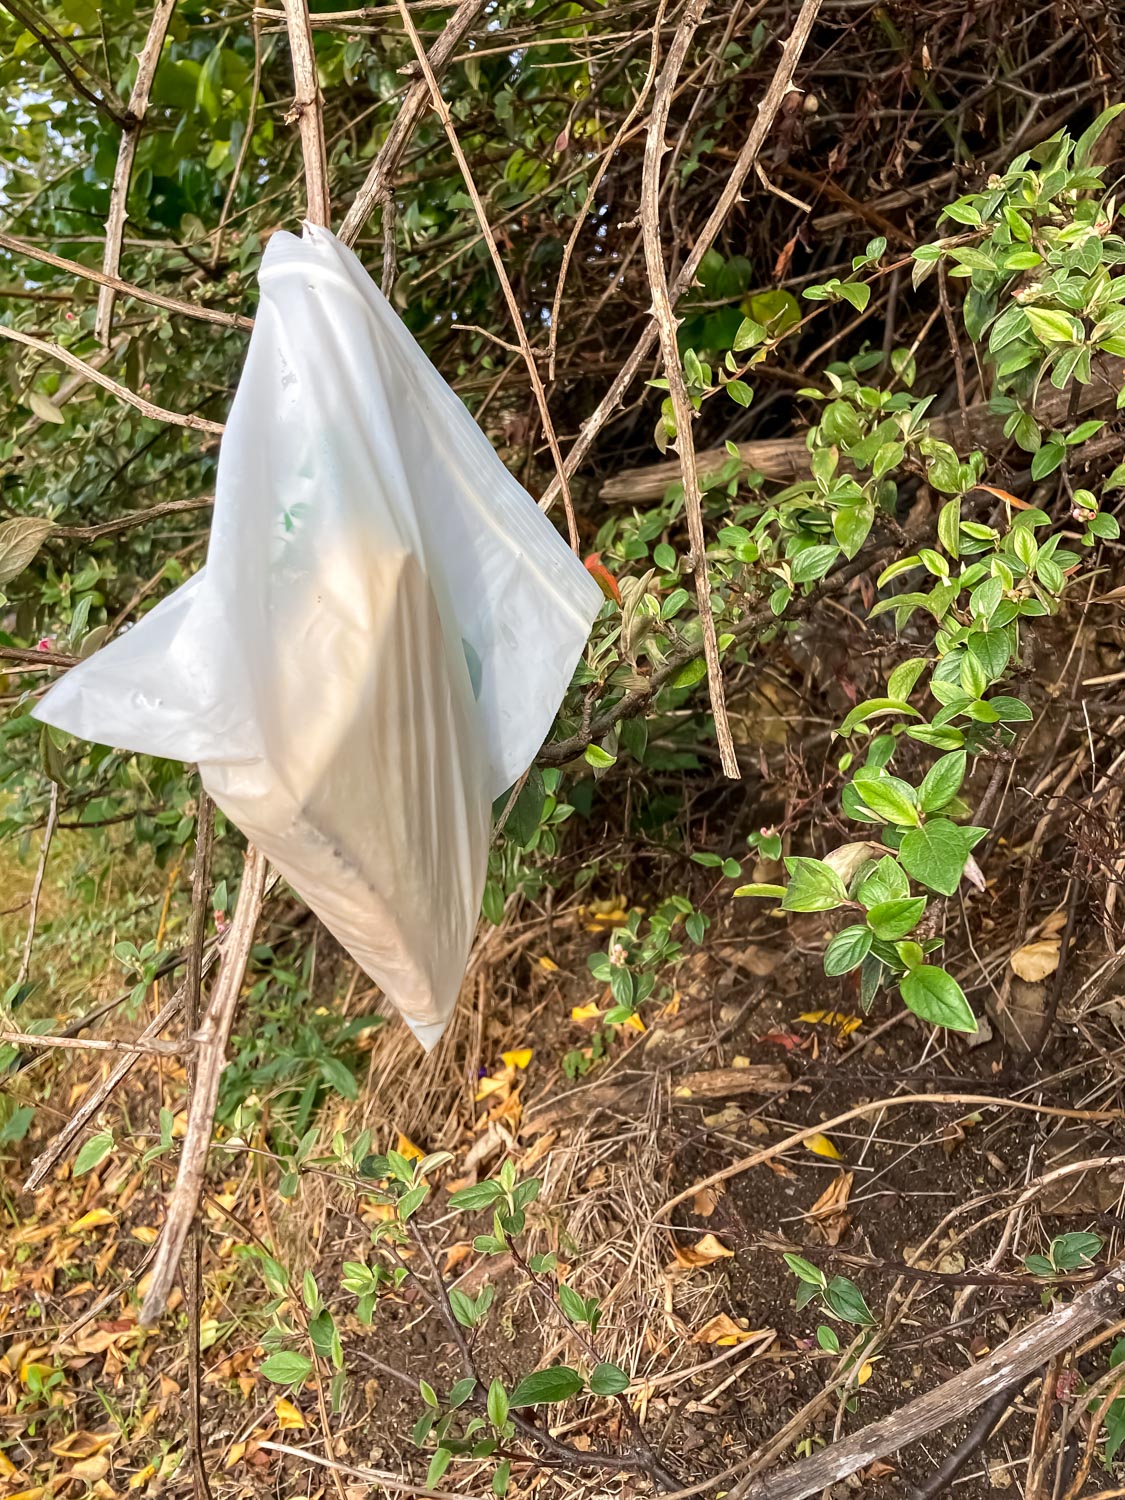 a sandwich in a plastic sandwich bag hanging in a leafy bush